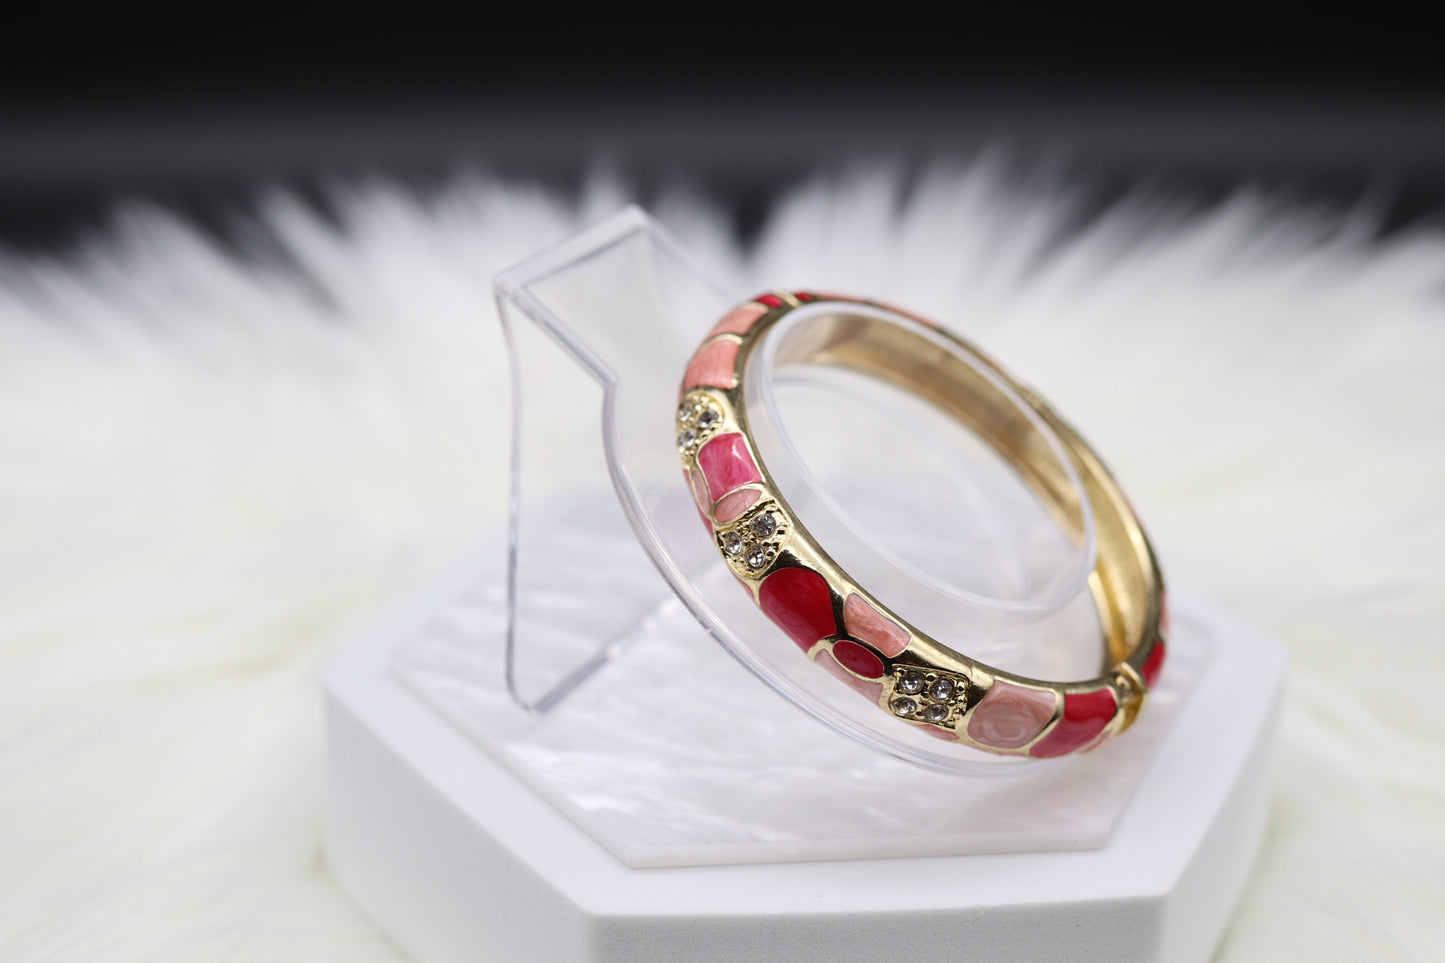 Red and Pink Enamel Bangle Hinged Bracelet